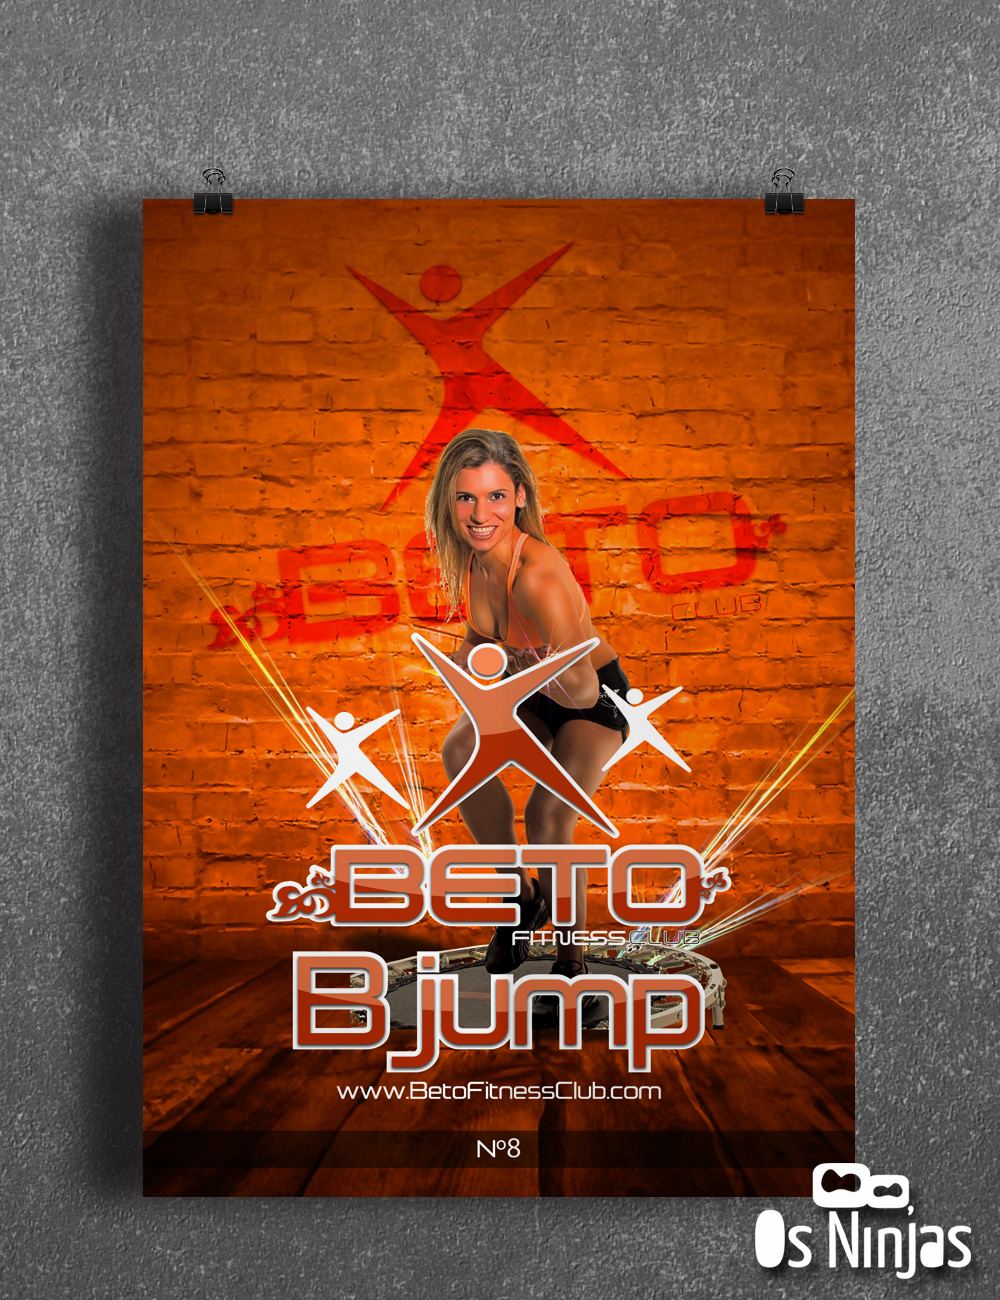 ninjas ninja poster design fitness Health club Combat pump jump Pilates Yoga step body training